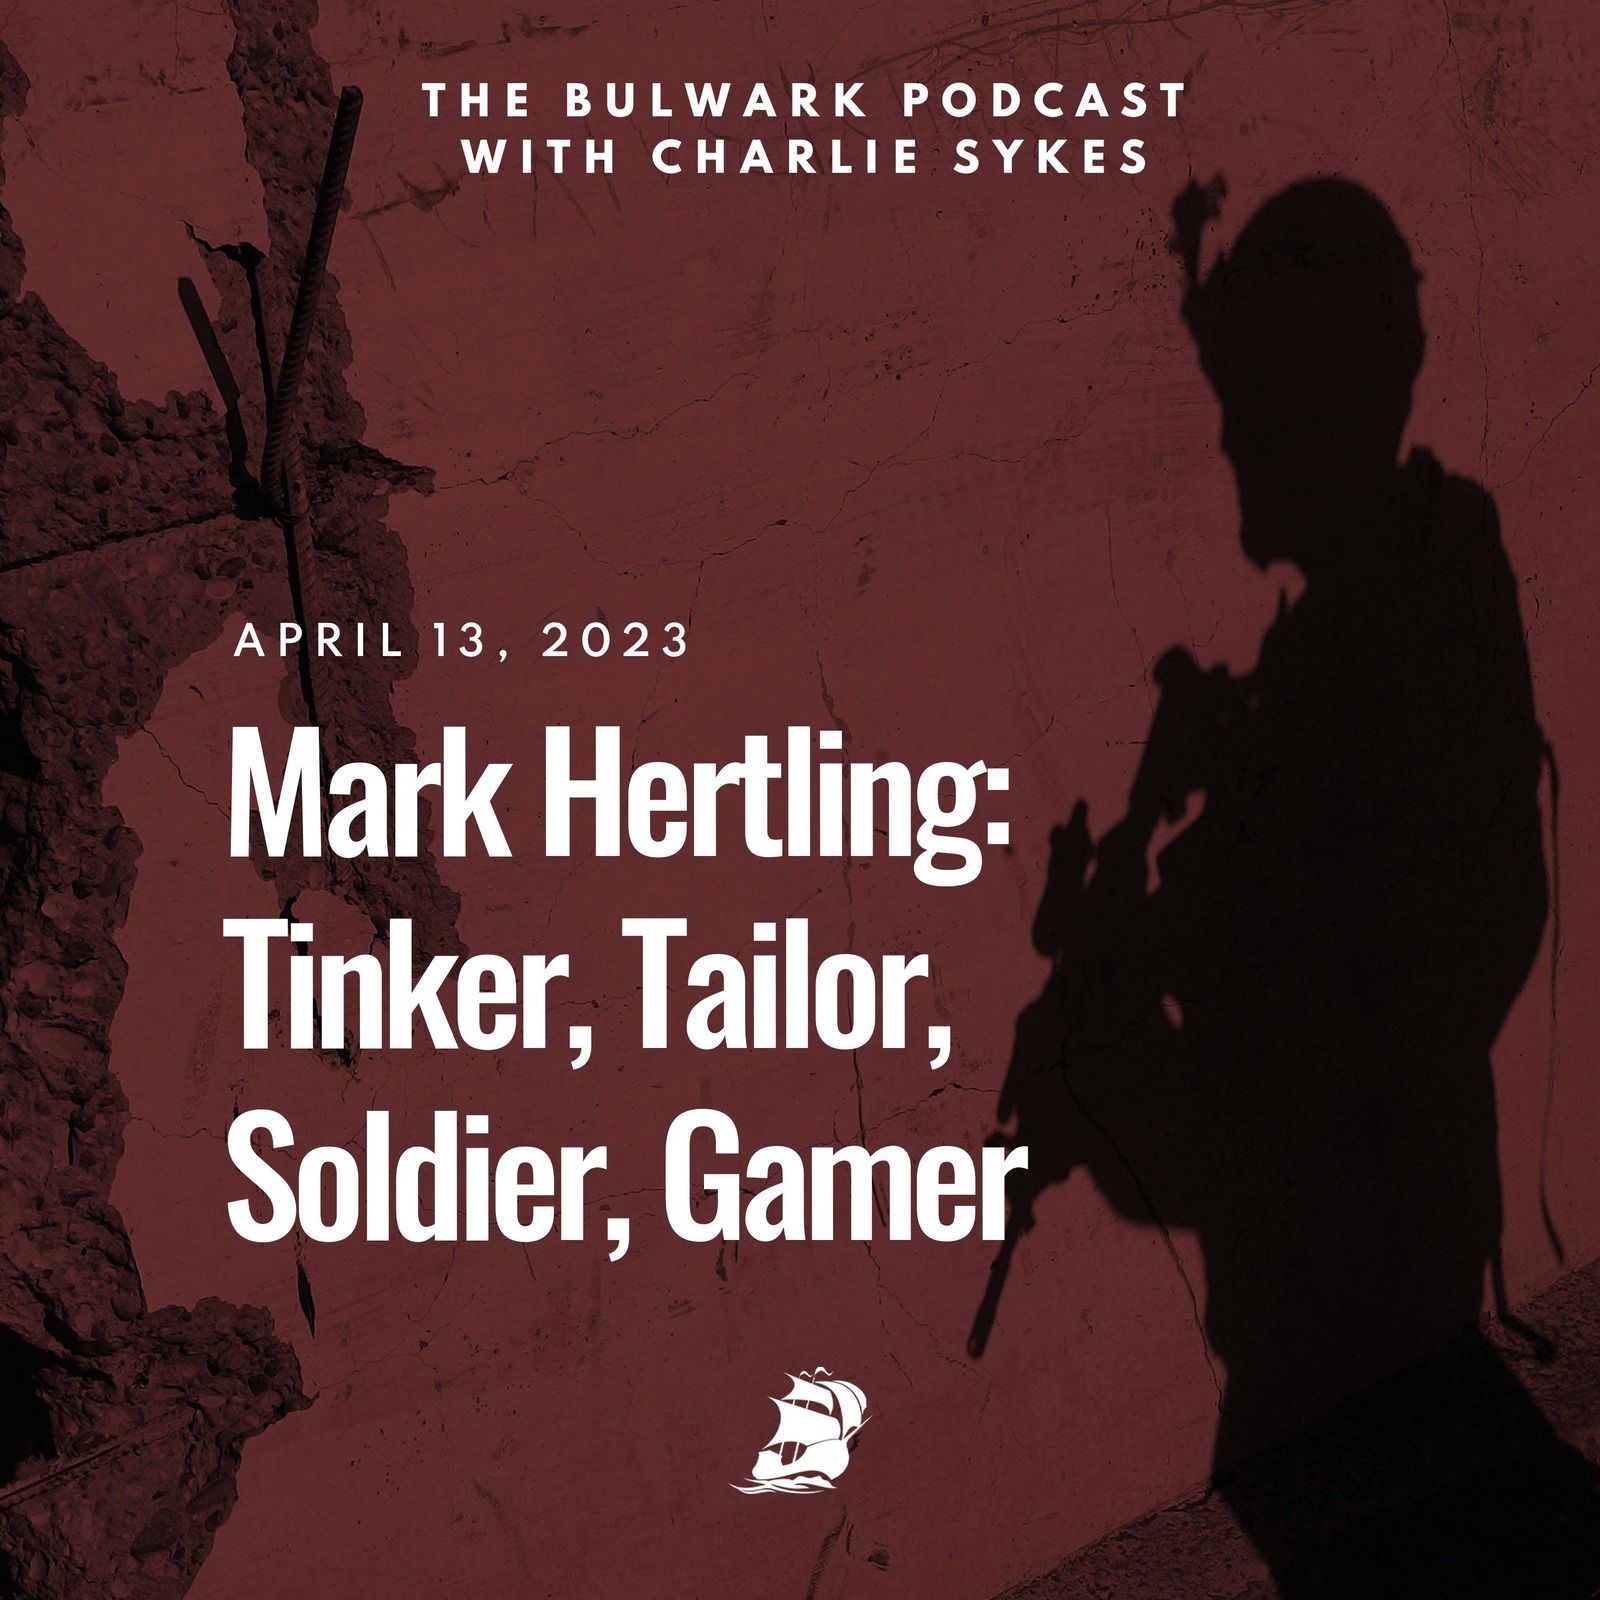 Mark Hertling: Tinker, Tailor, Soldier, Gamer by The Bulwark Podcast